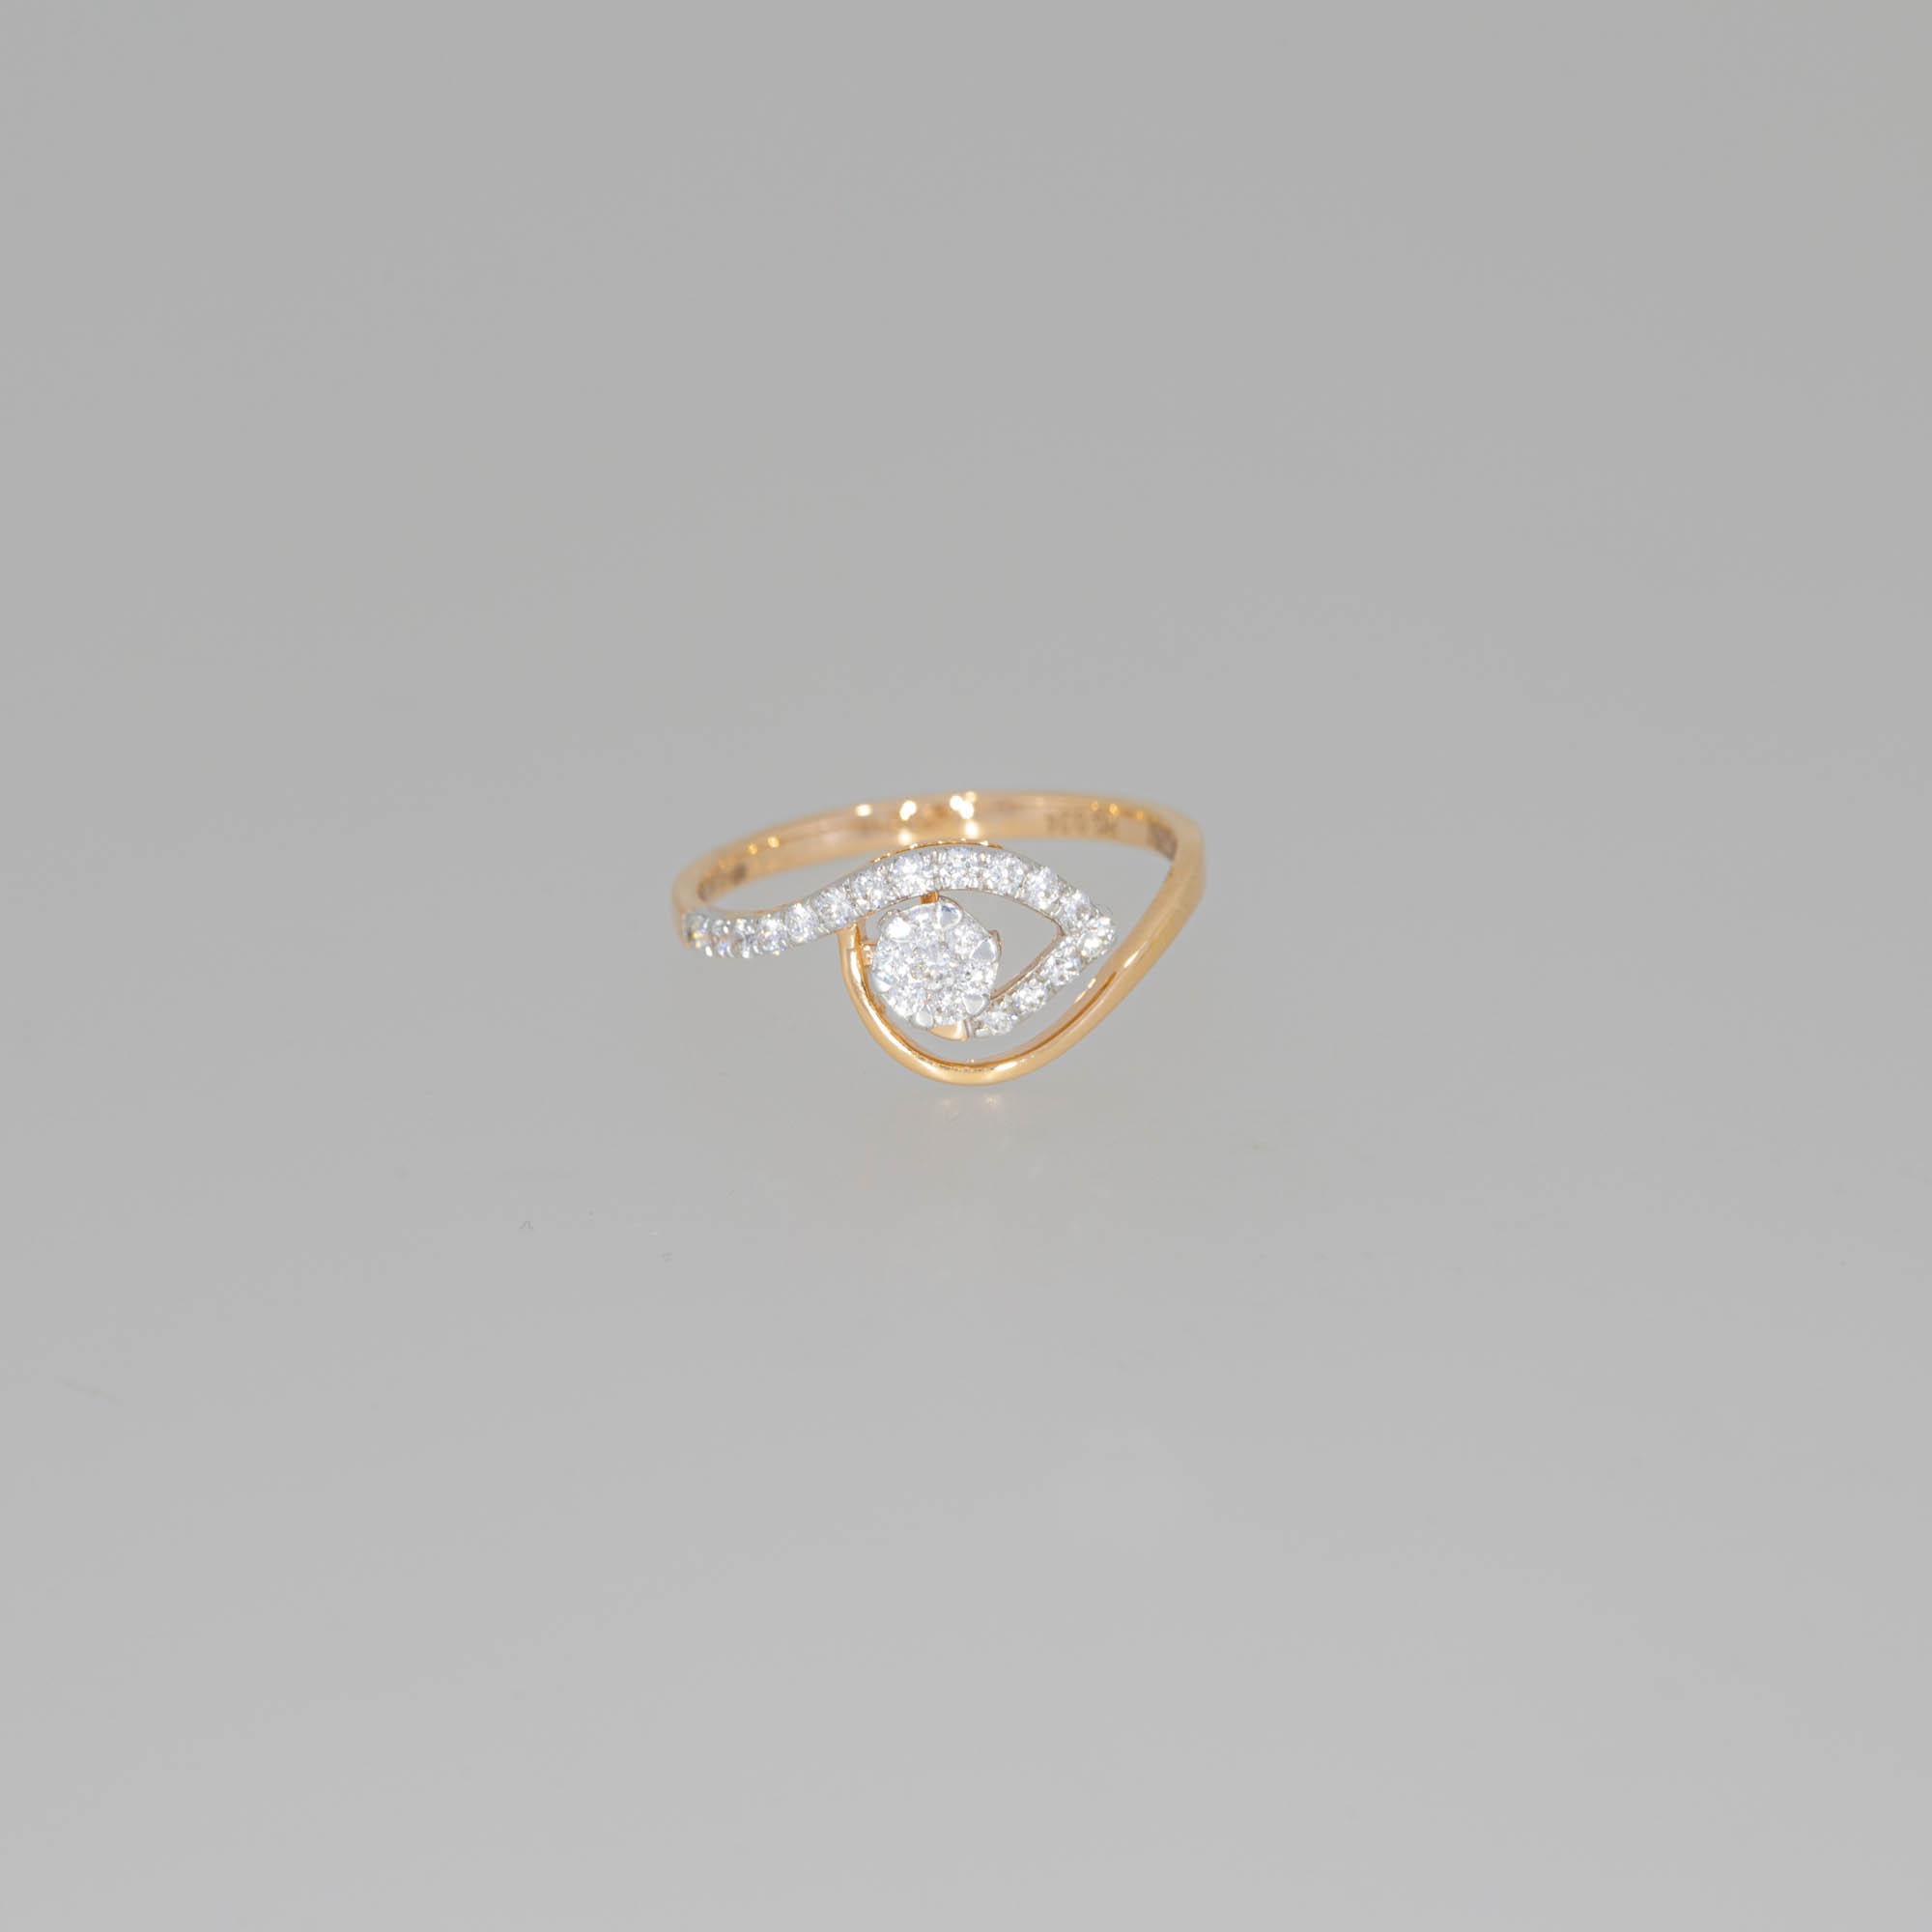 Stylish 18ct Diamond Ring